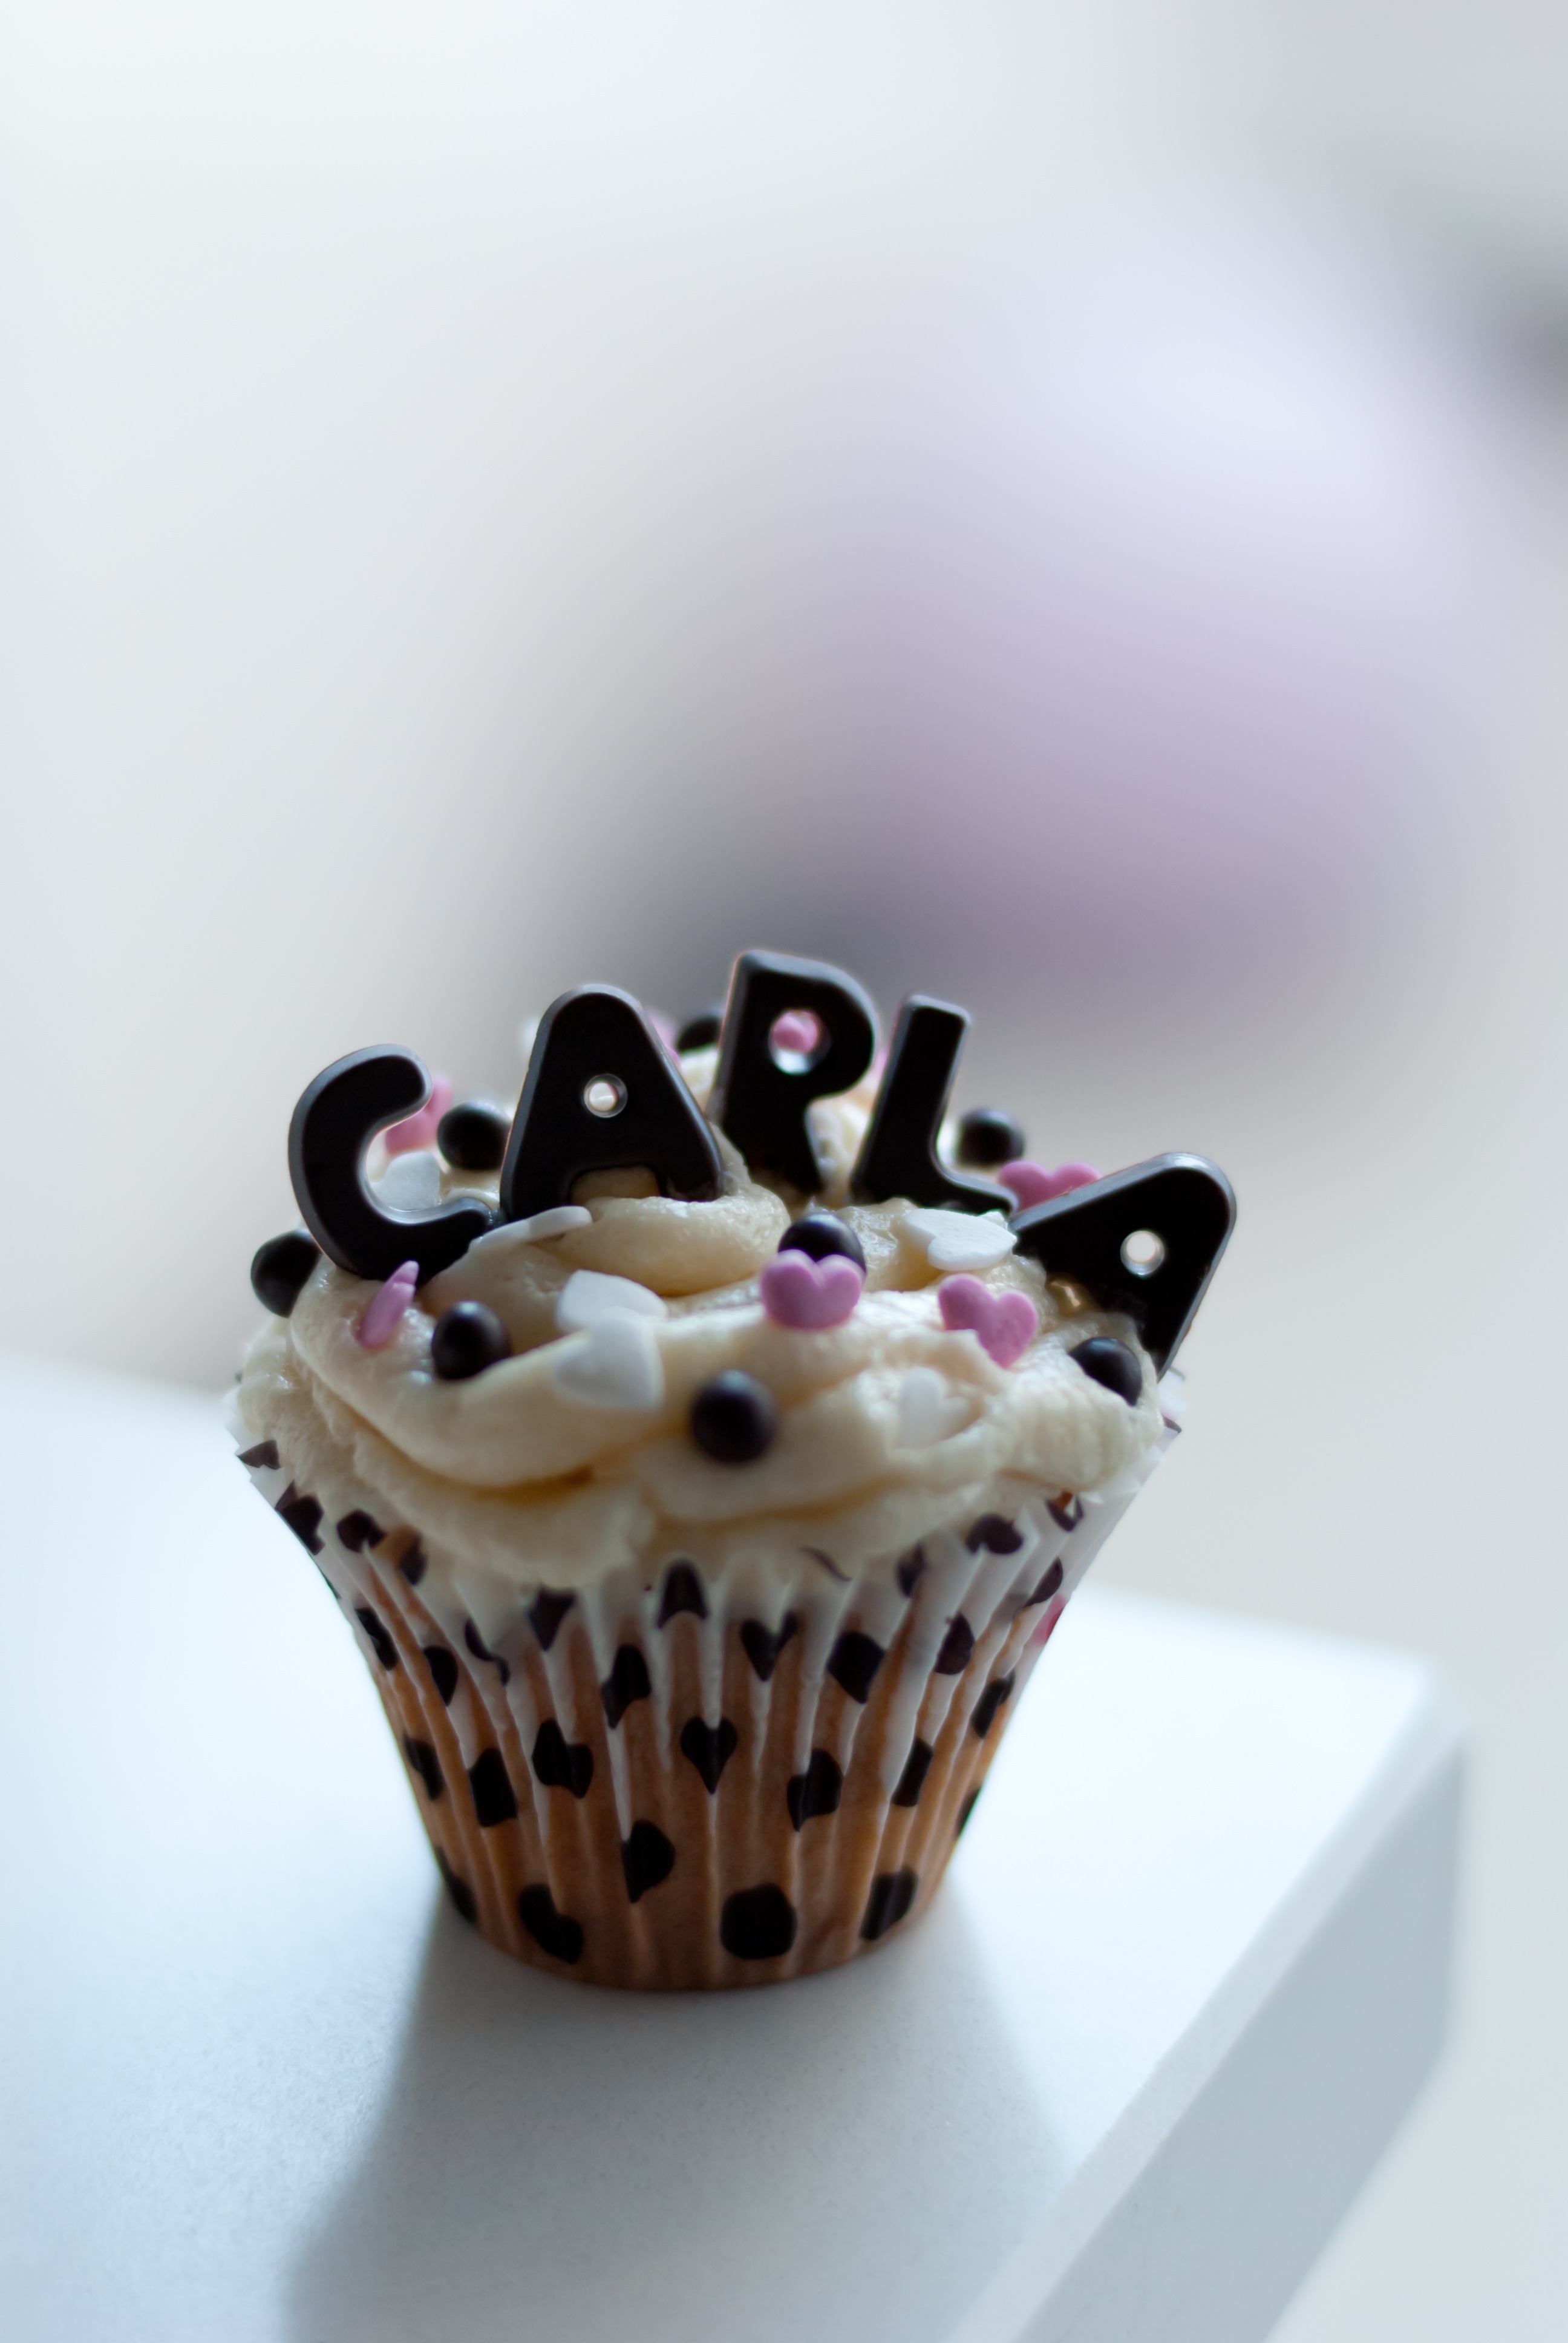 carla cupcake toppings